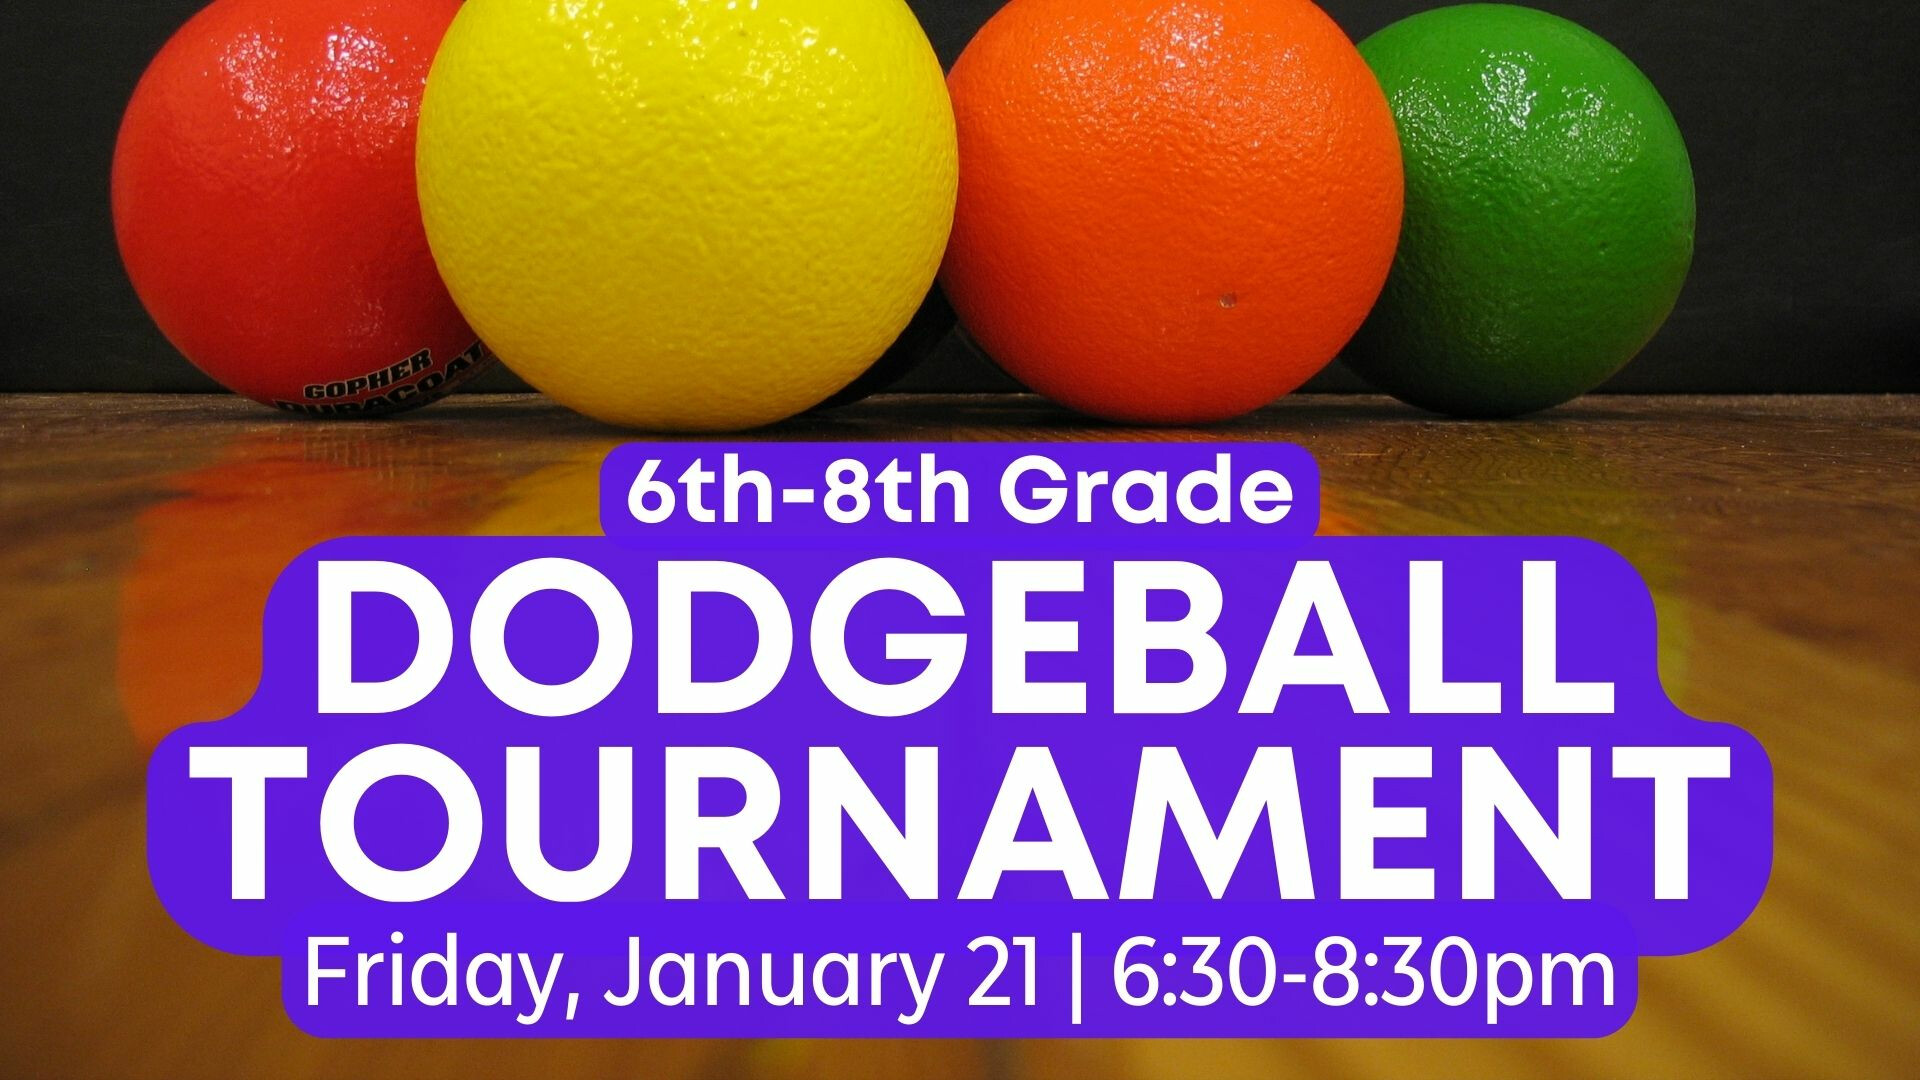 Dodgeball Tournament (6th-8th Grade)